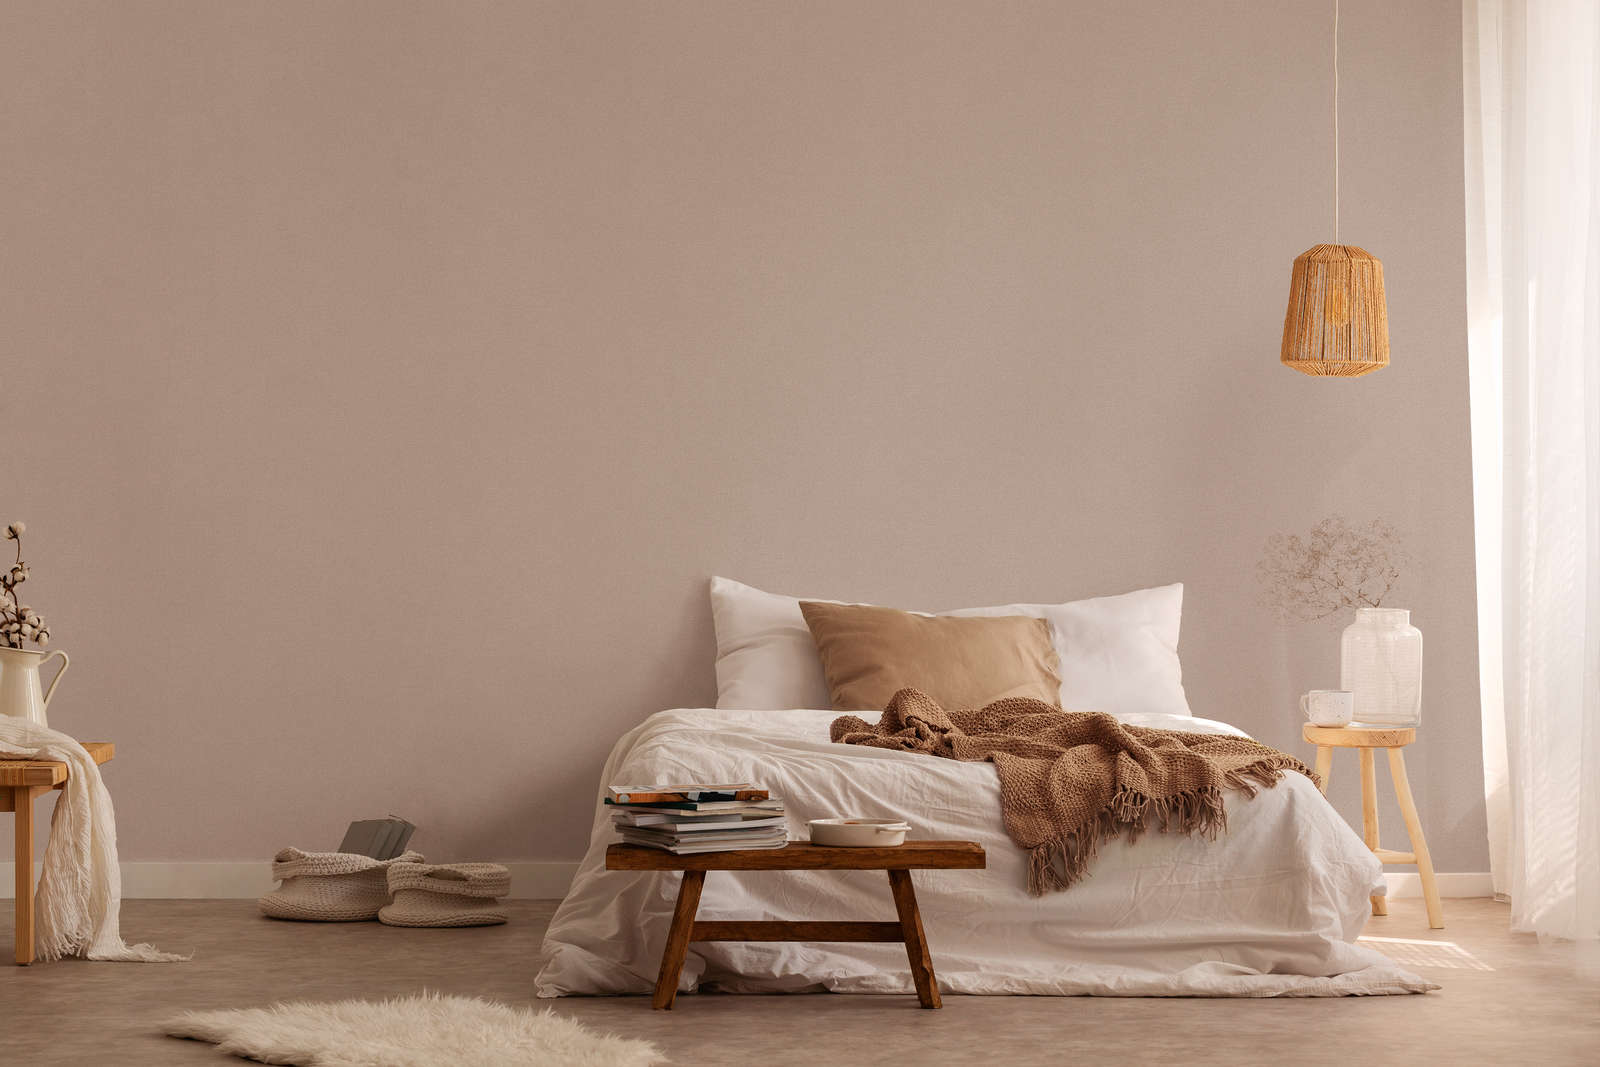             Plain wallpaper with linen look PVC-free - brown, beige
        